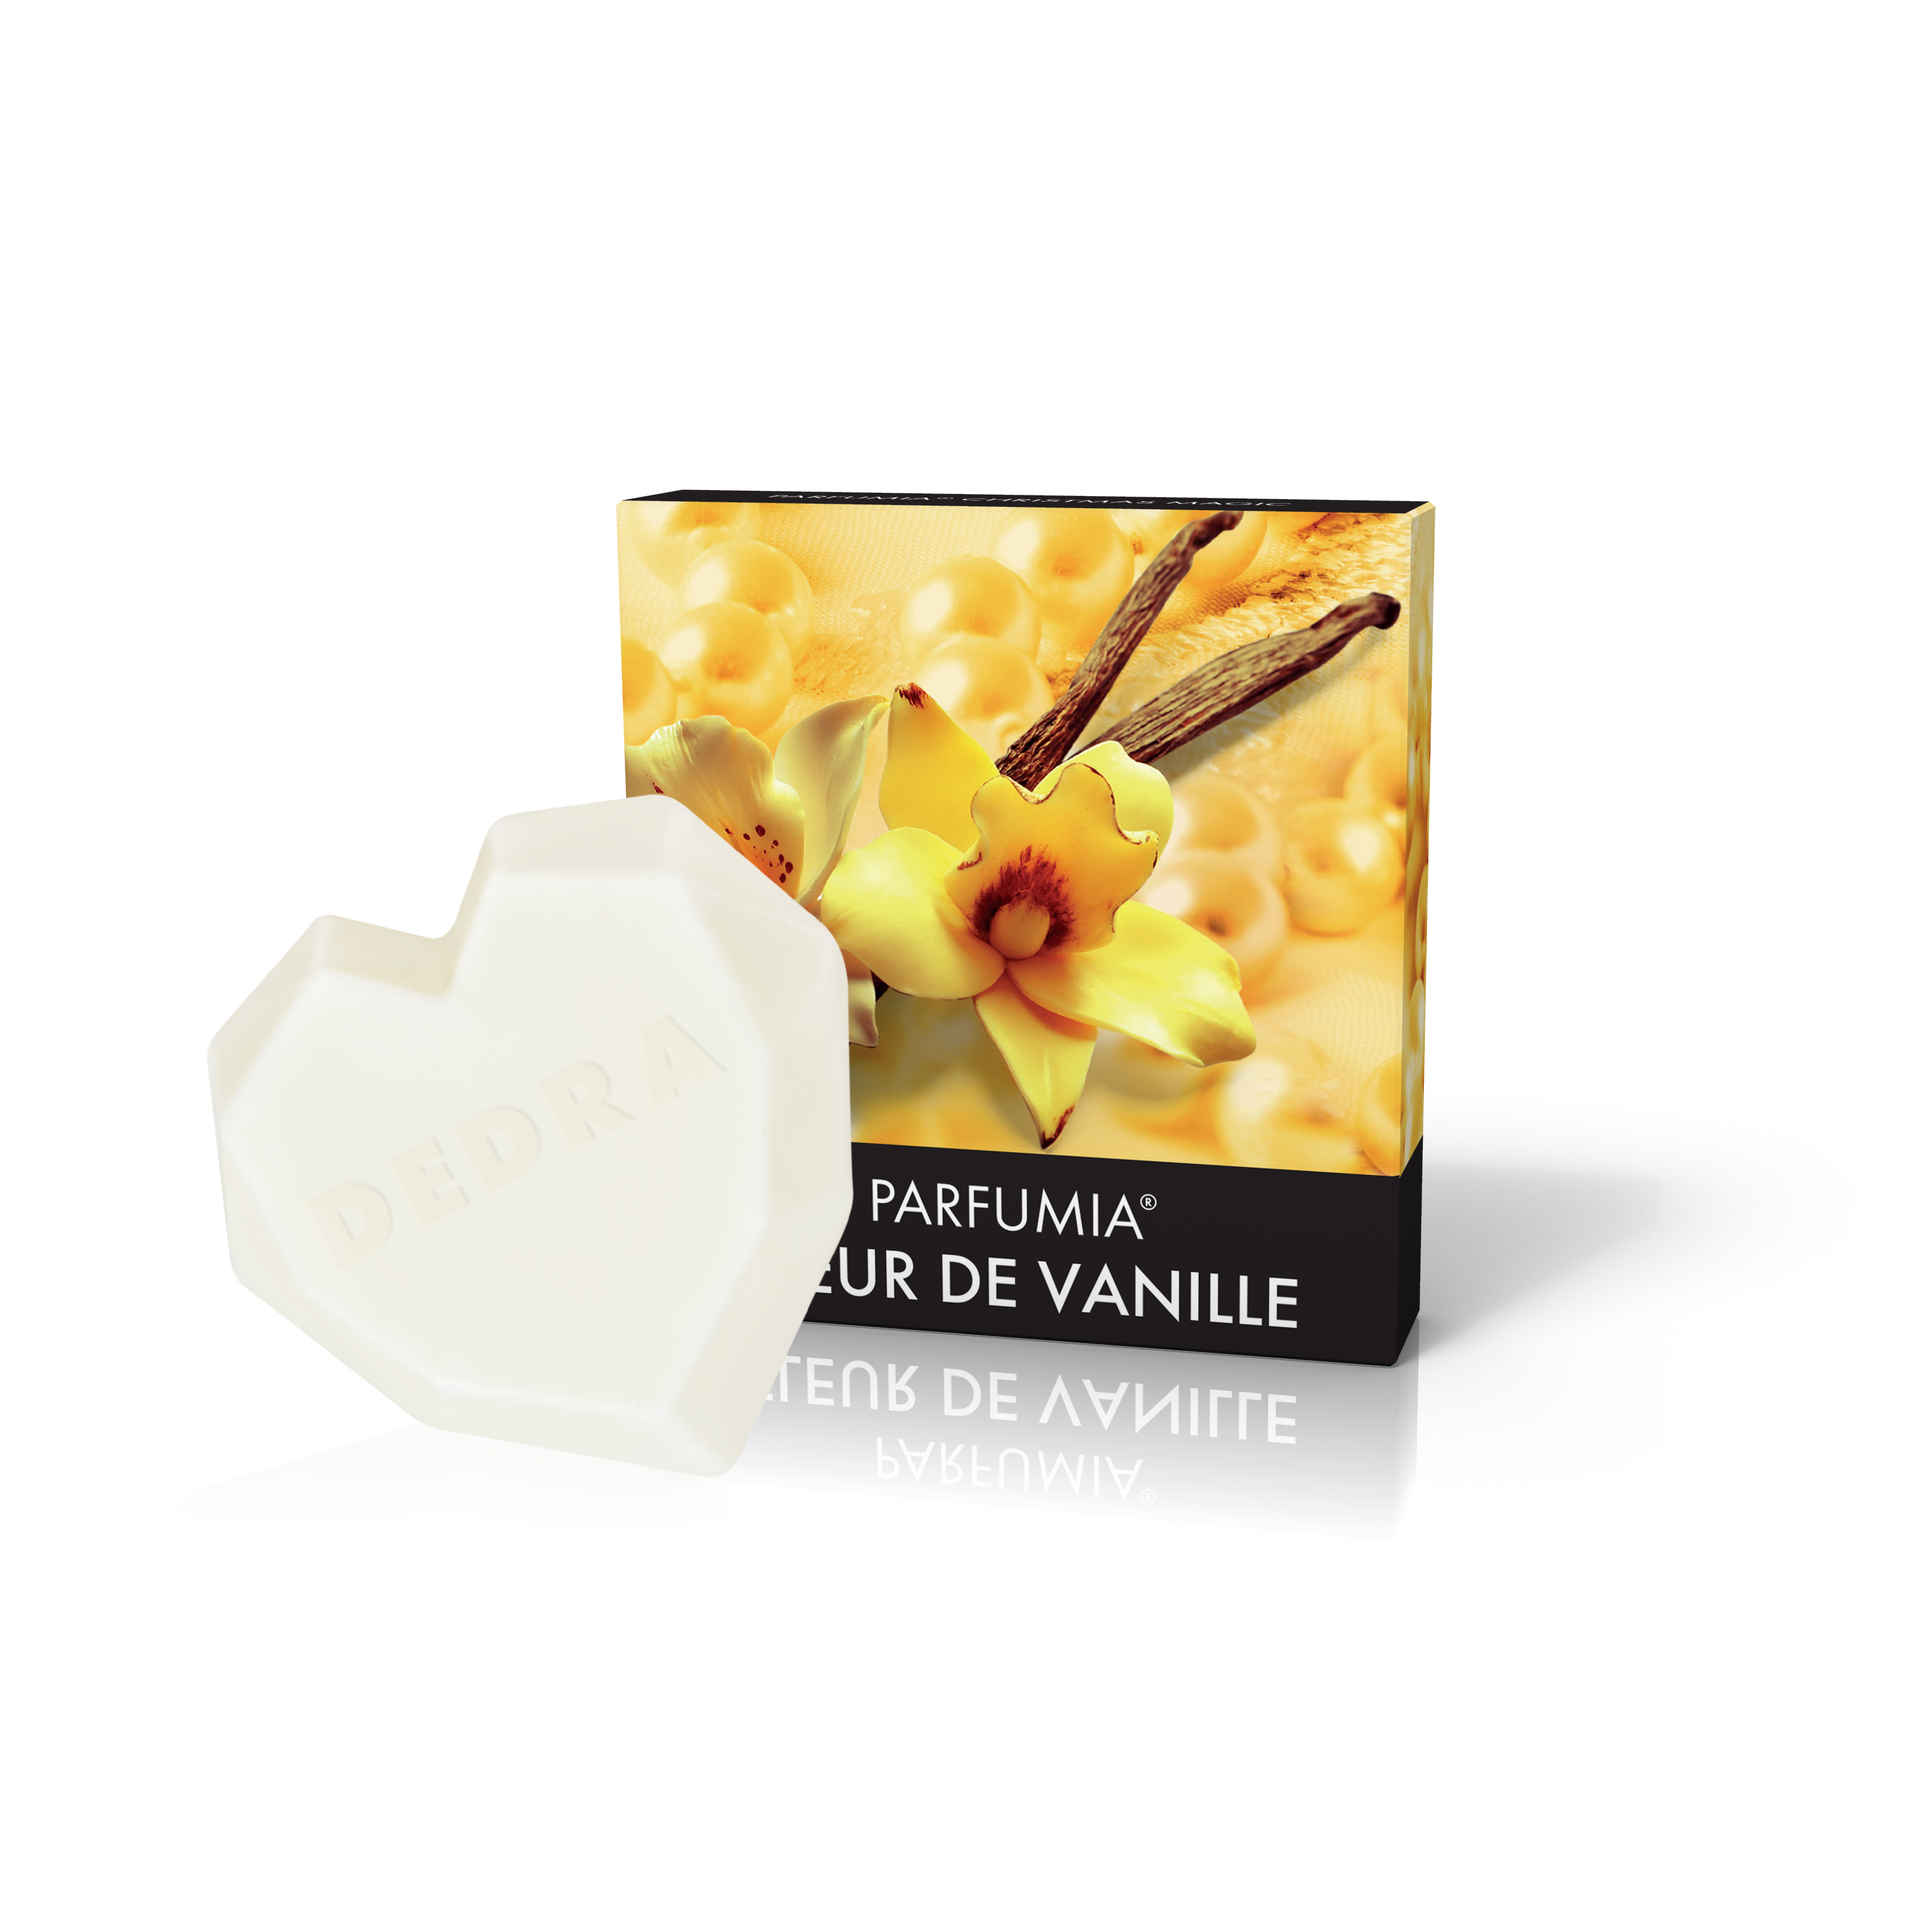 Vonný sójový EKO vosk Parfumia Fleur de vanille